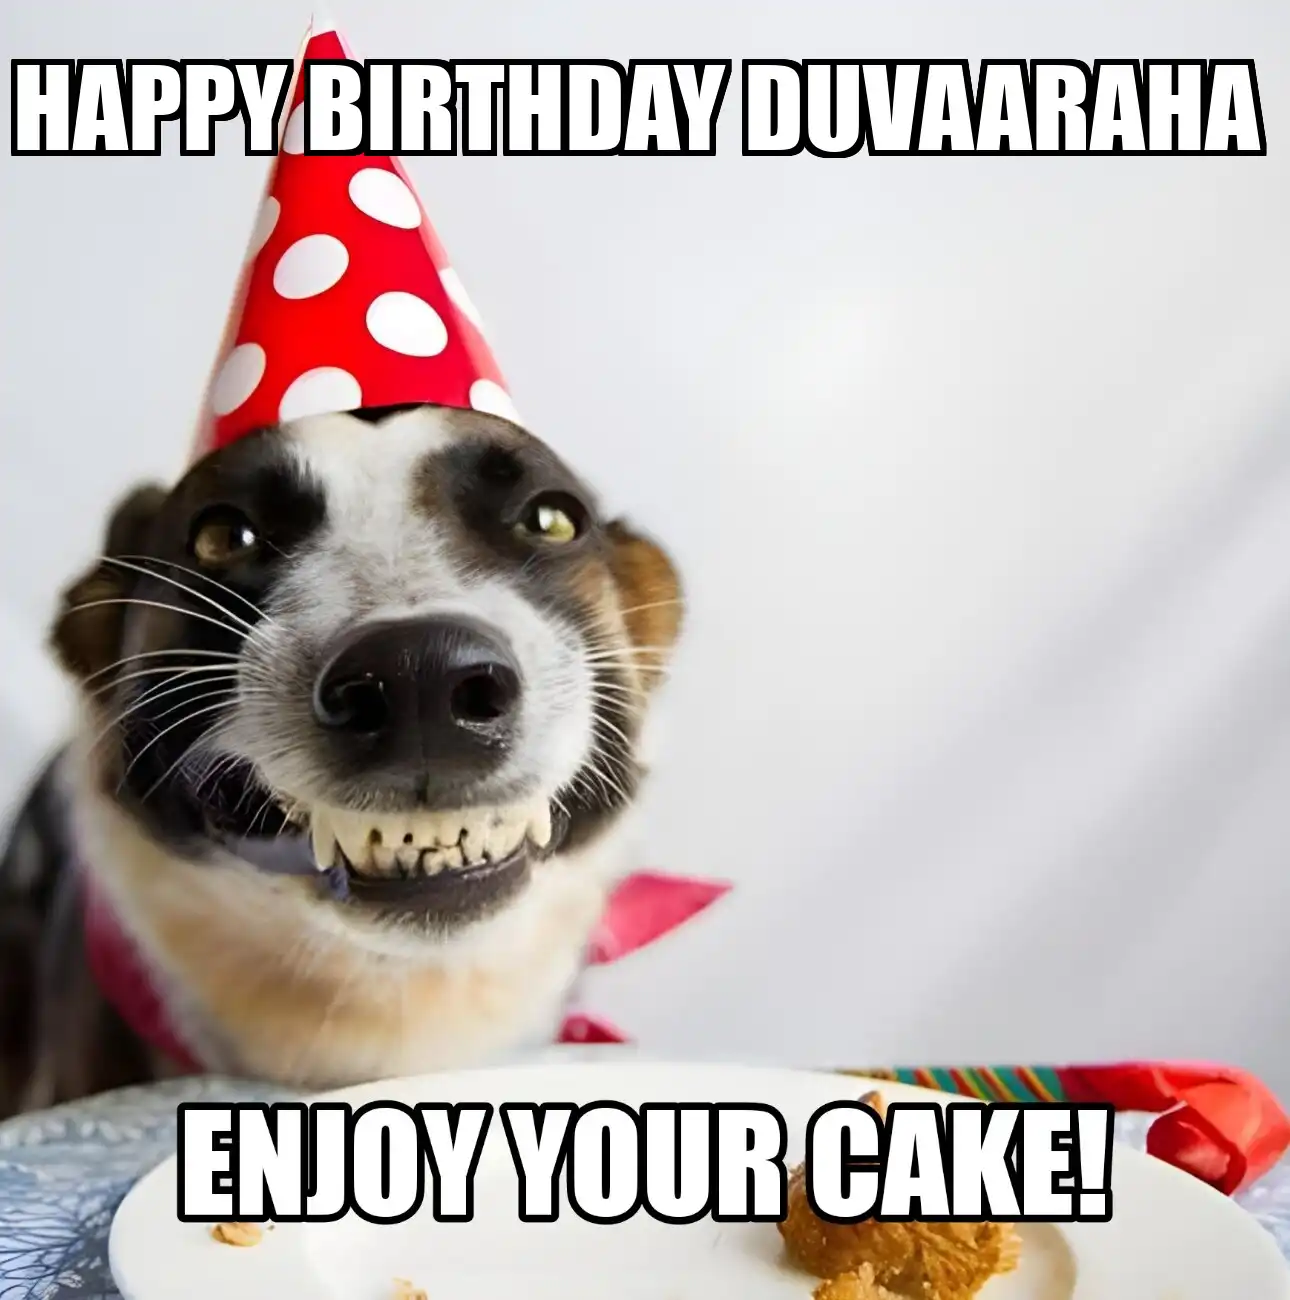 Happy Birthday Duvaaraha Enjoy Your Cake Dog Meme